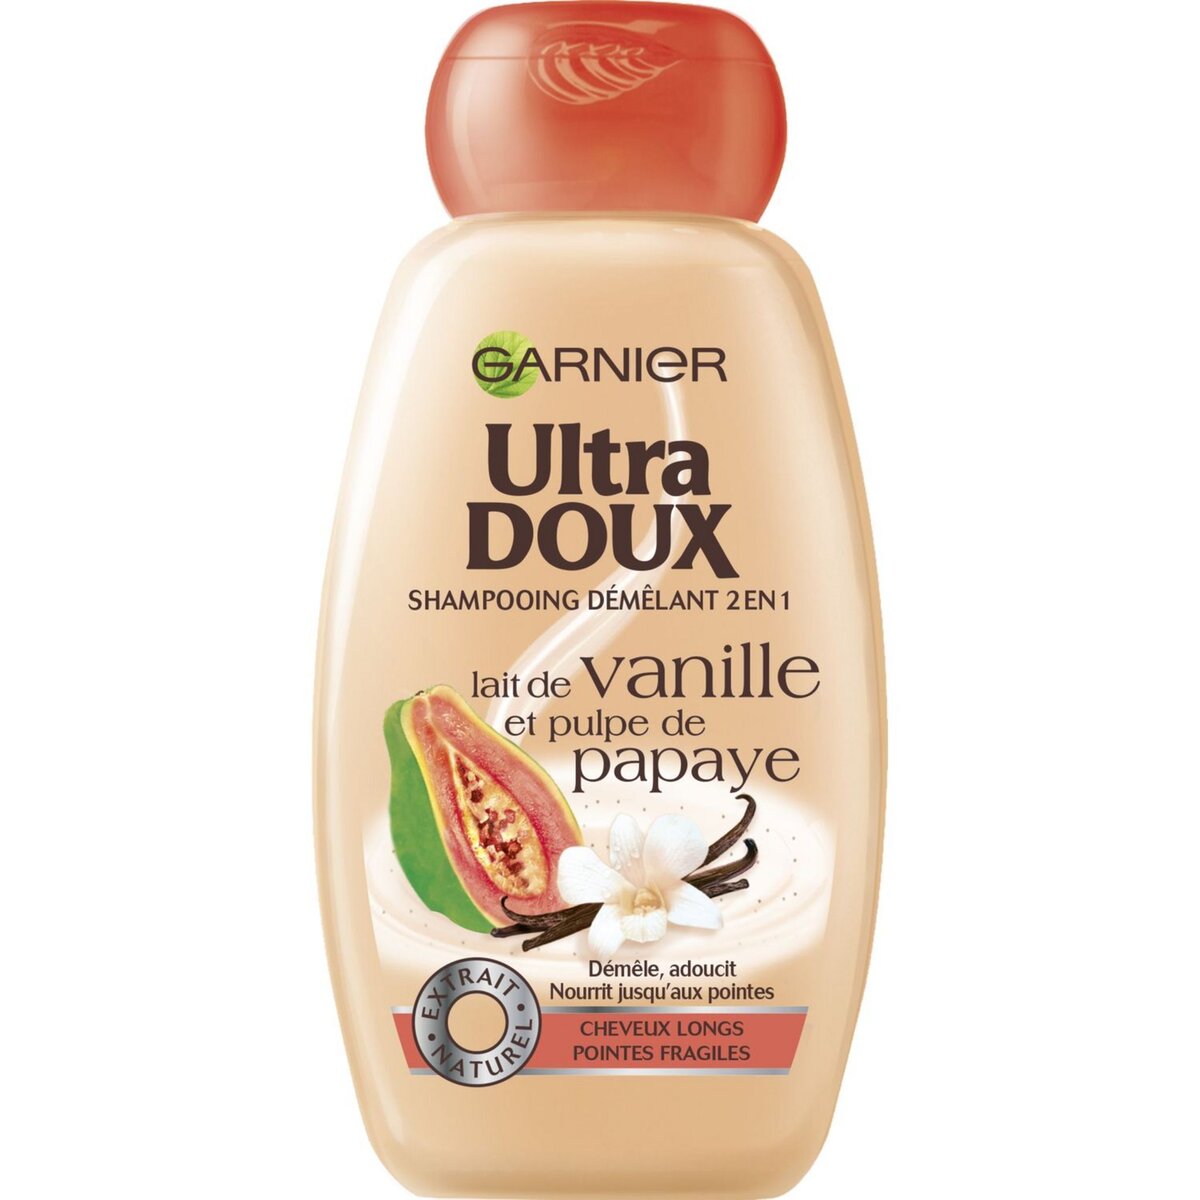 ULTRA DOUX Shampooing démêlant vanille & papaye cheveux longs, pointes fragiles 250ml